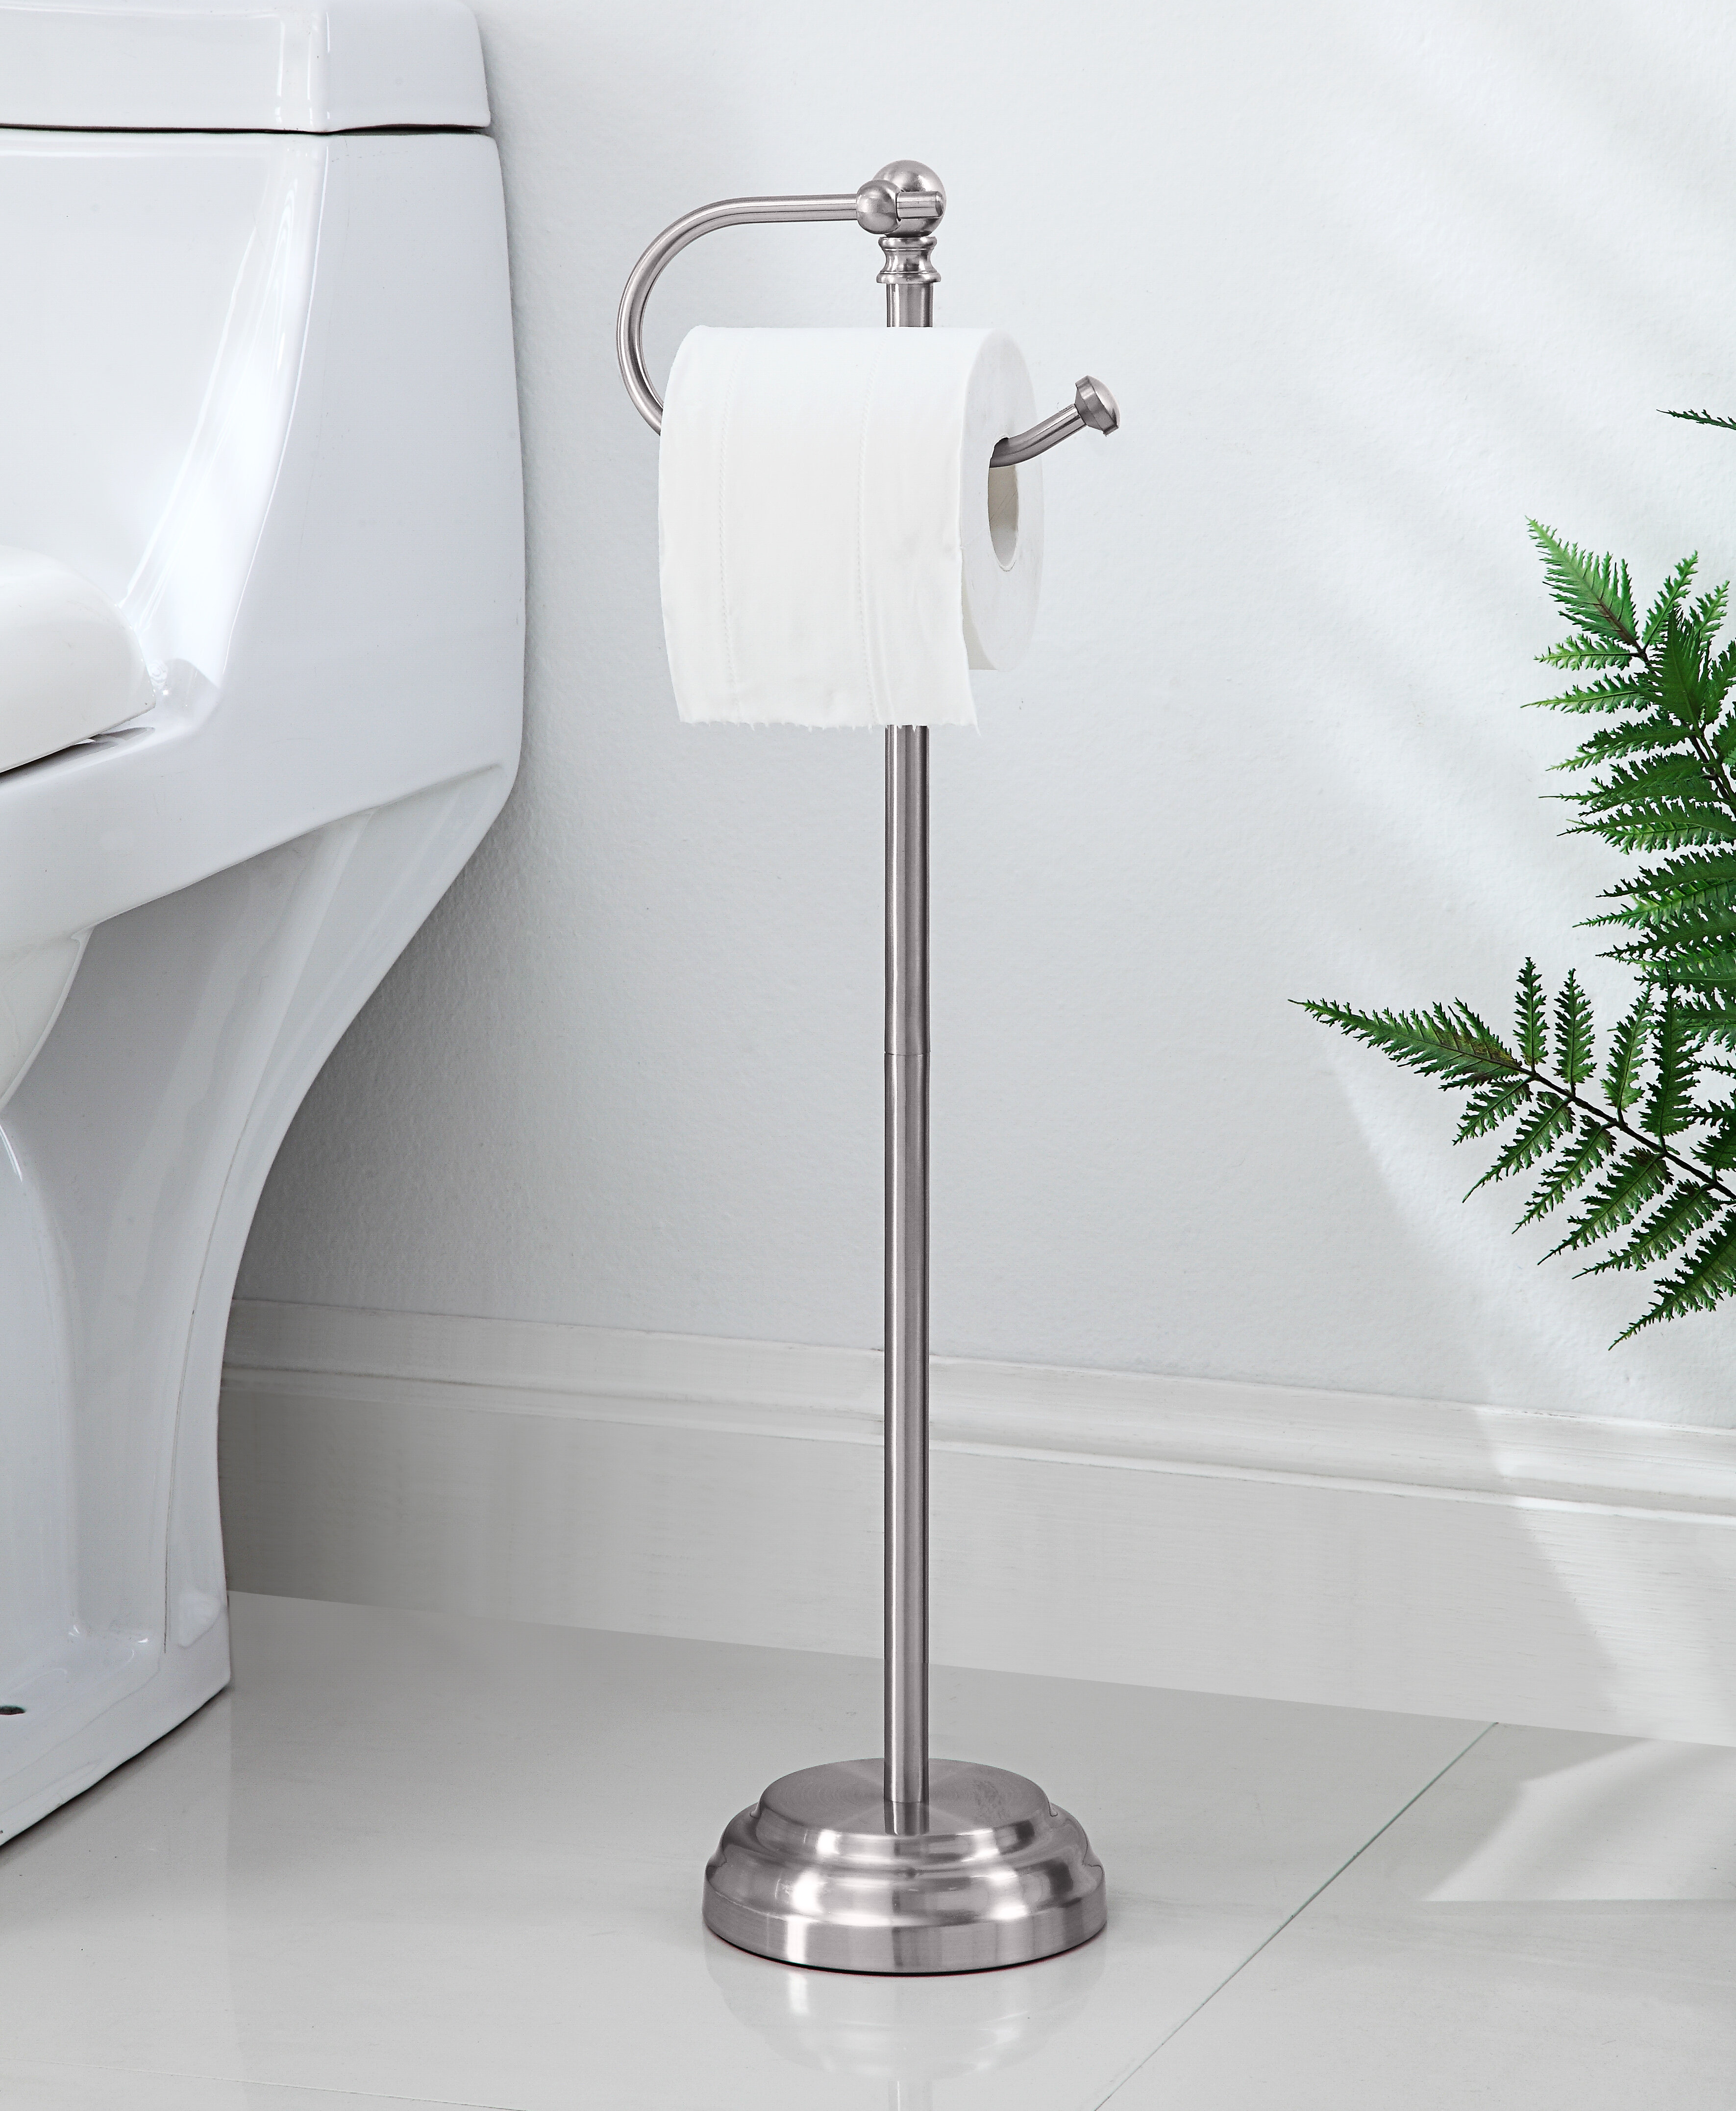 Pedestal Toilet Paper Holder Free Standing Tissue Stand Bathroom Decor New 